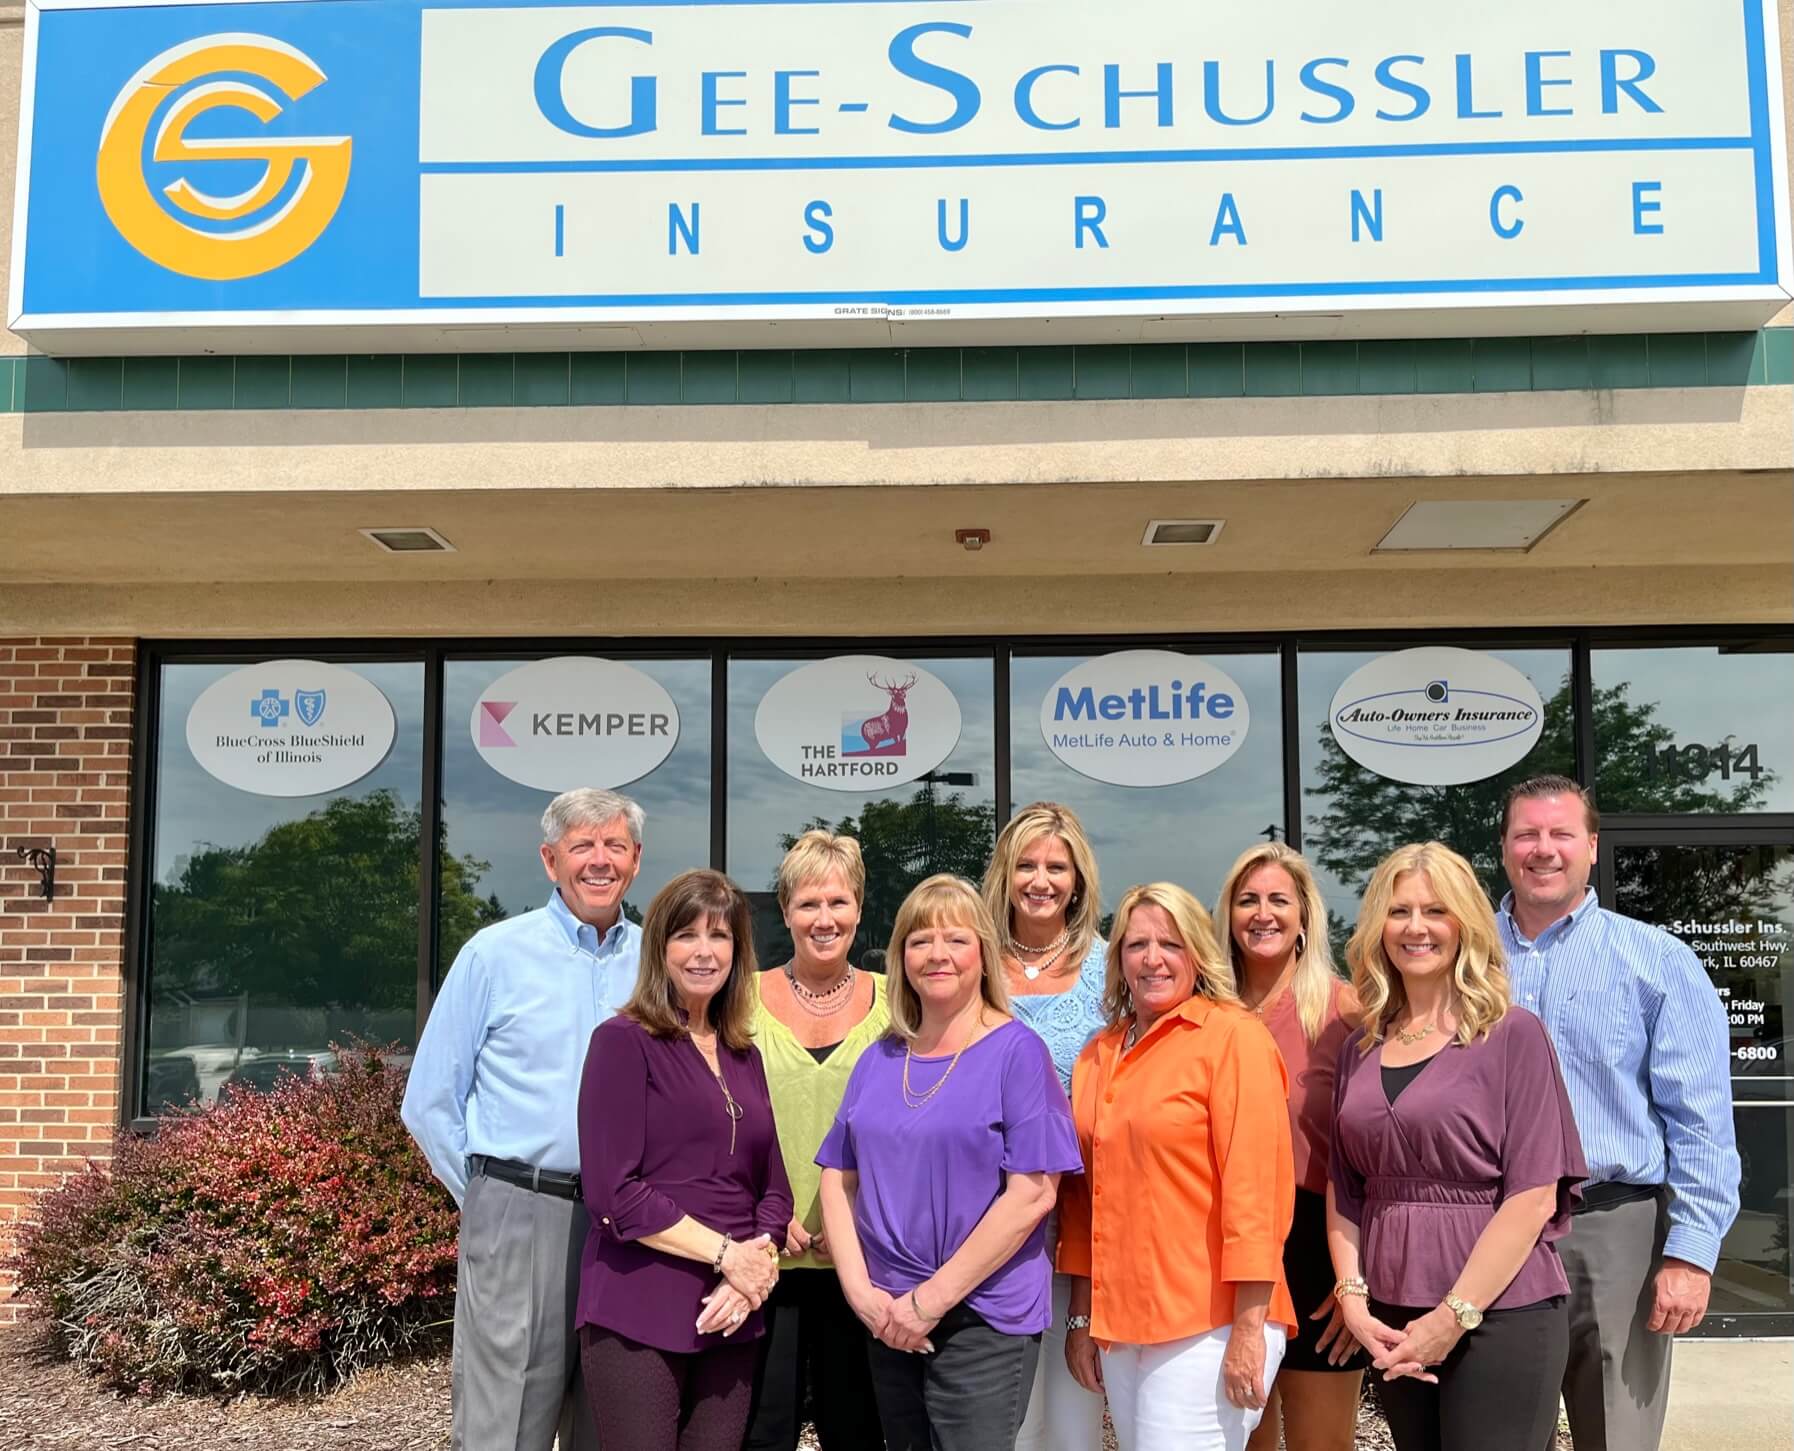 Gee-Schussler Insurance